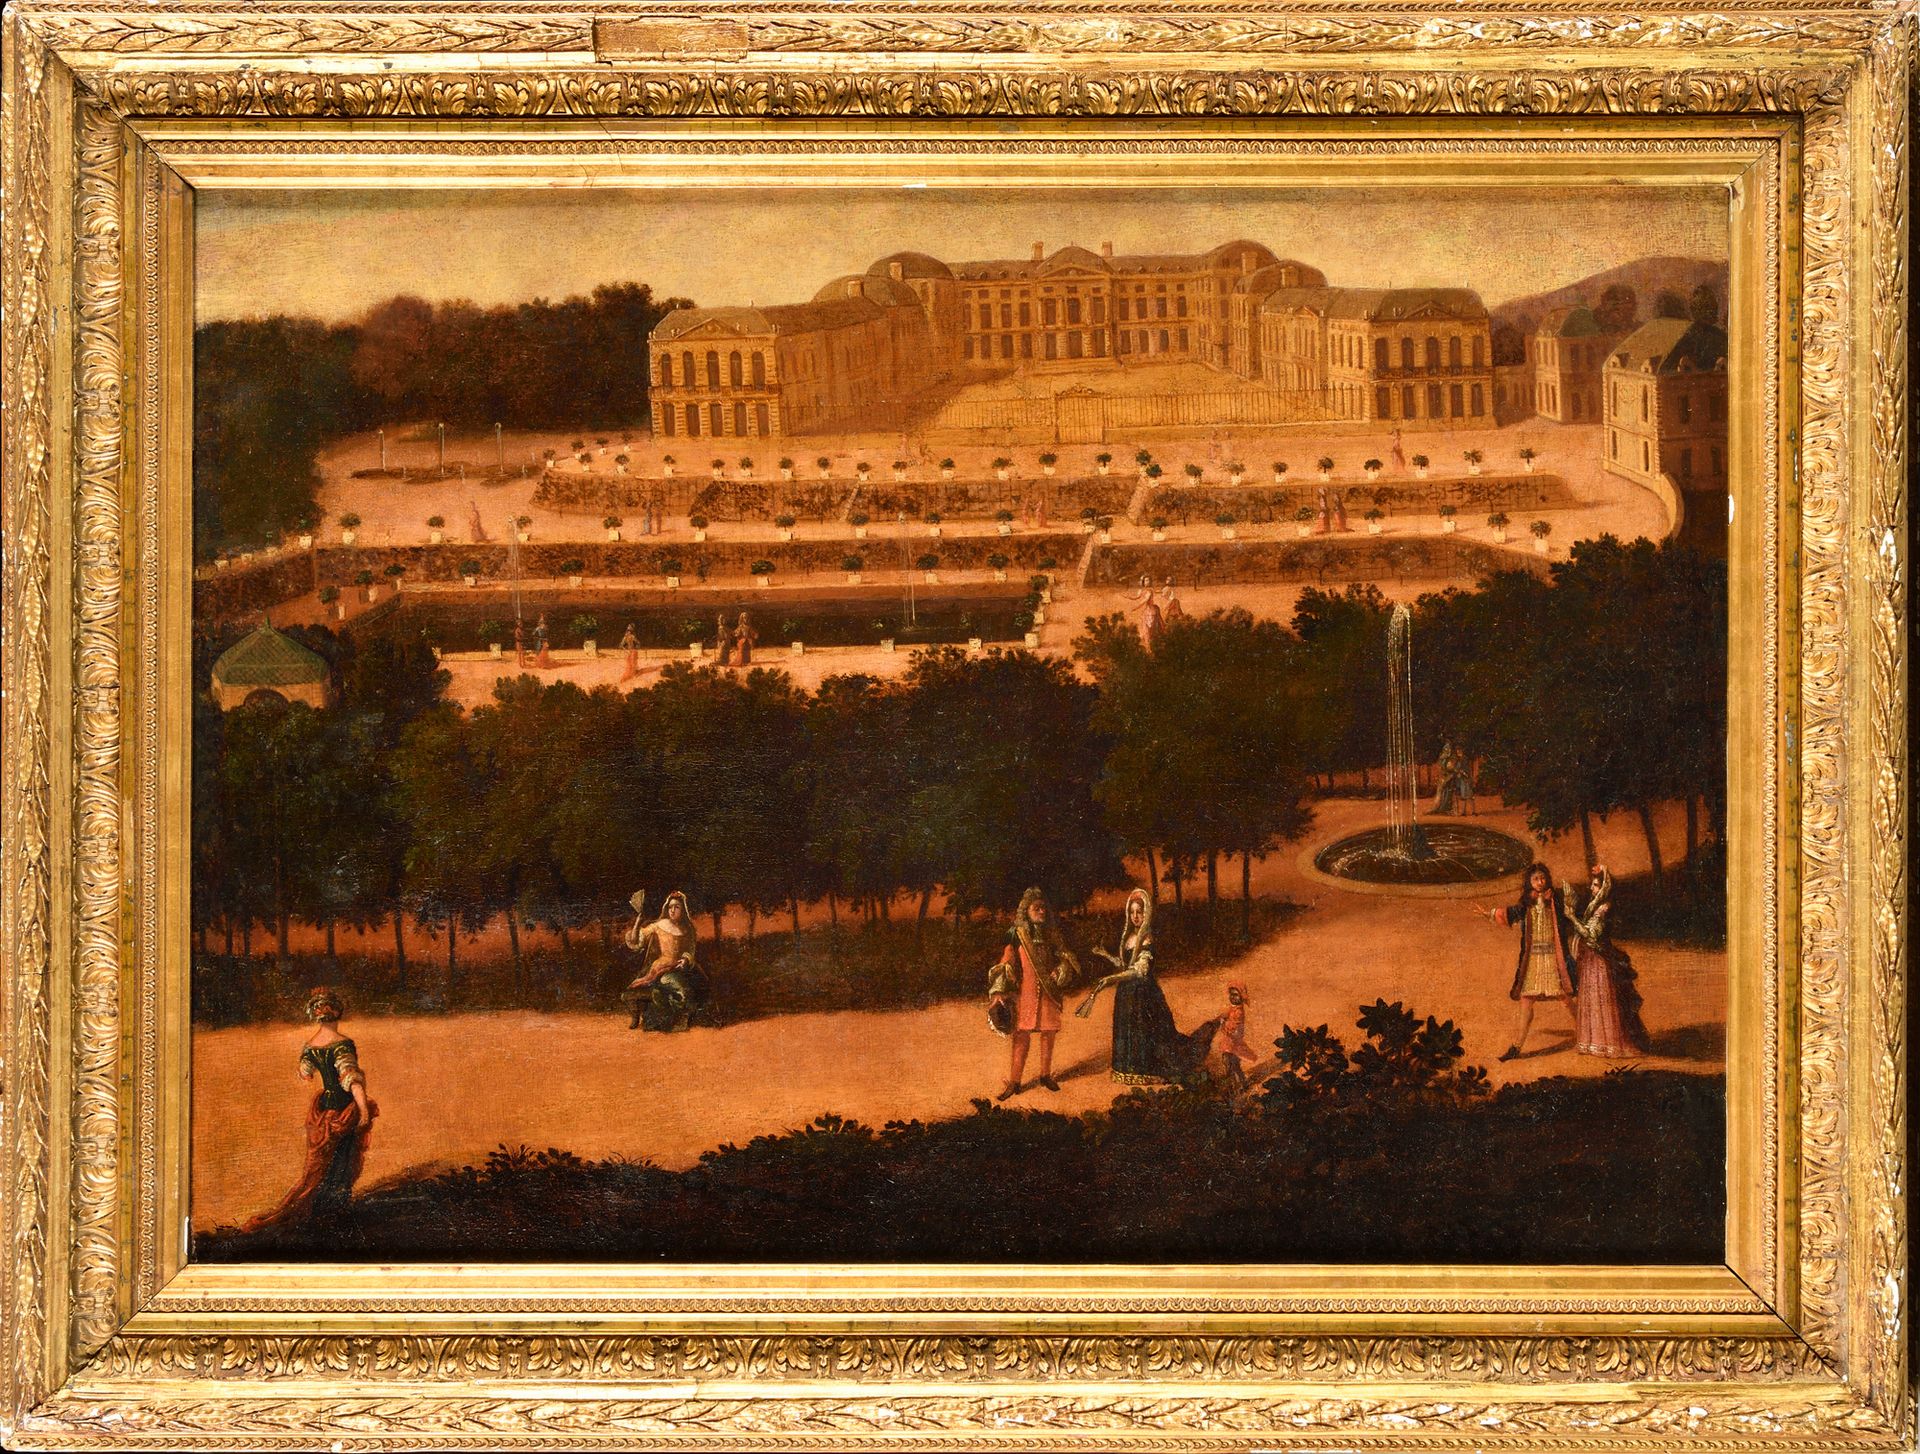 Null 18世纪的法国学校。

"圣云 "城堡的景观，约1750年

布面油画（衬里，修复）。

56 x 77厘米。

鎏金框架与棕榈花纹